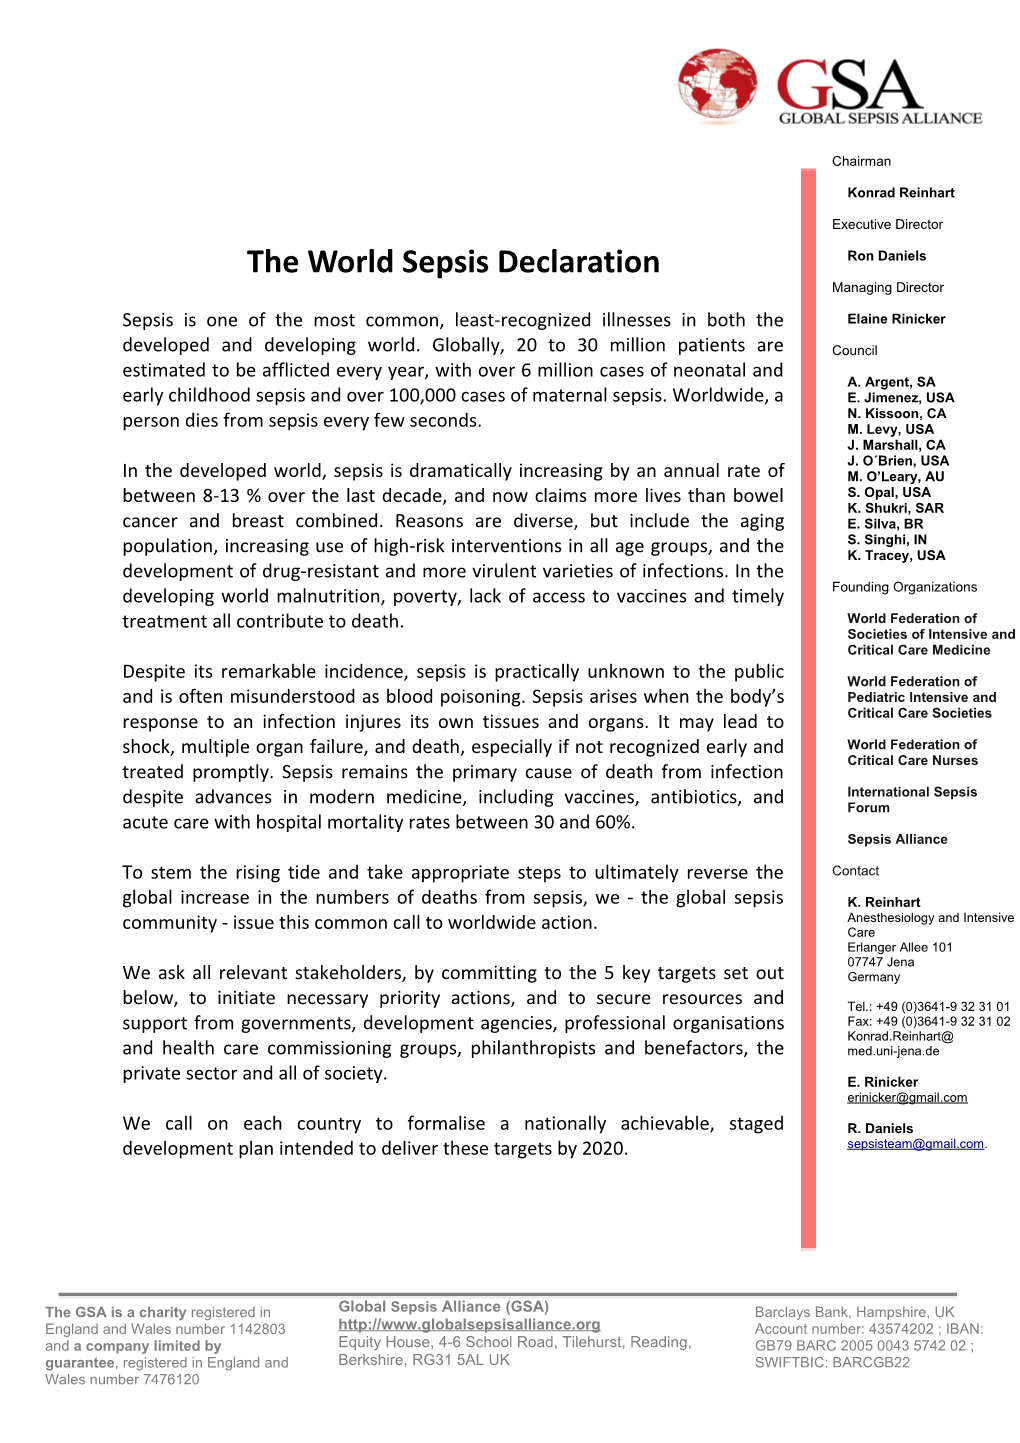 The World Sepsis Declaration